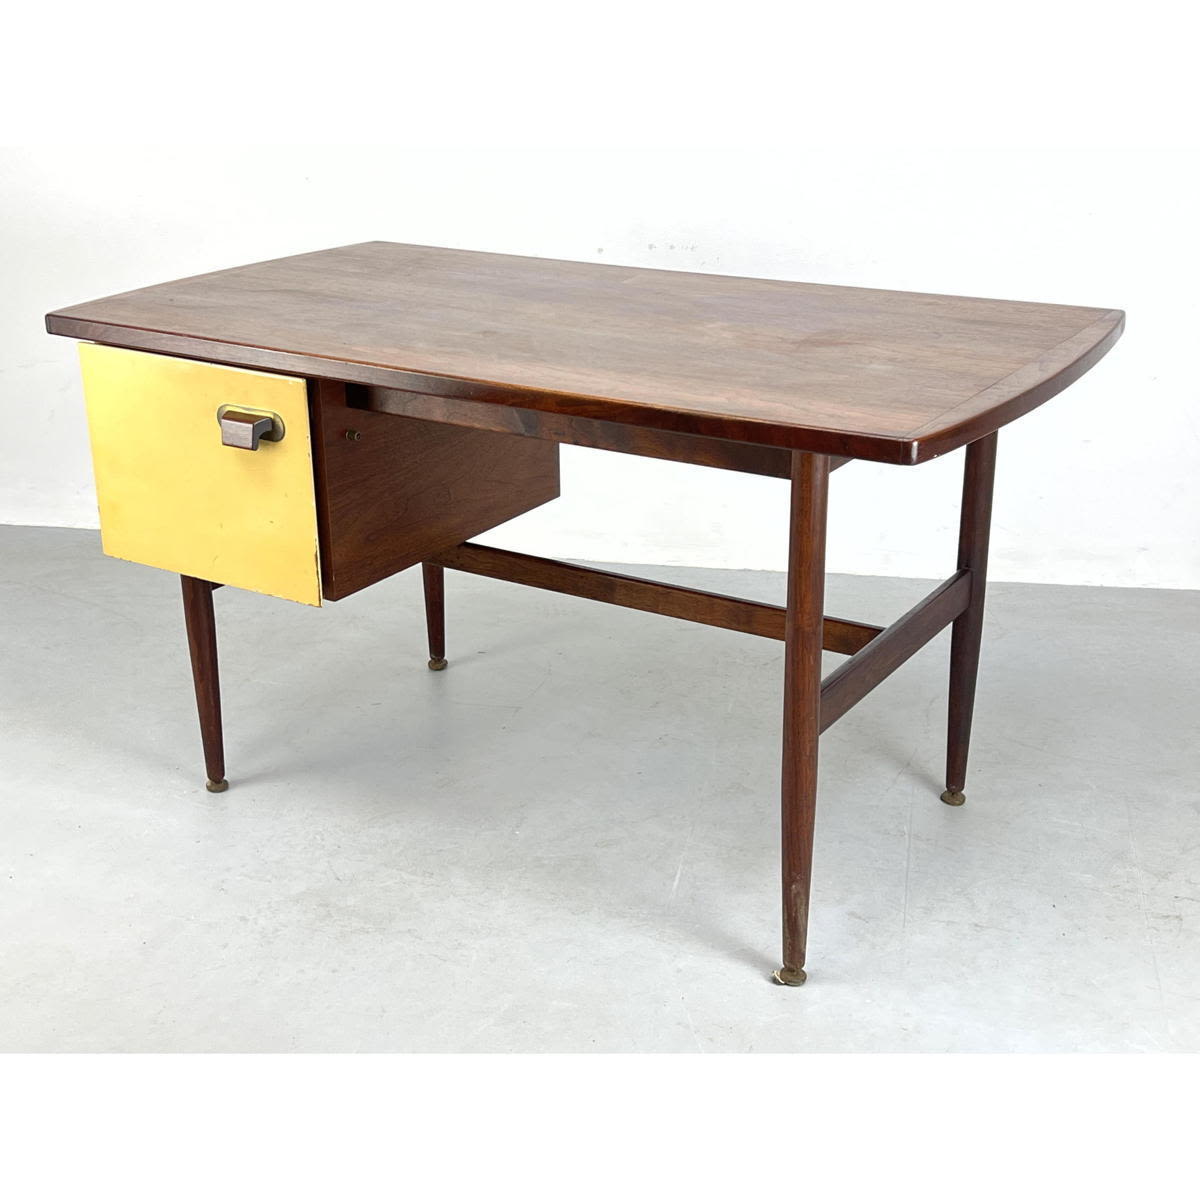 JENS RISOM Modernist Desk American 3acb64